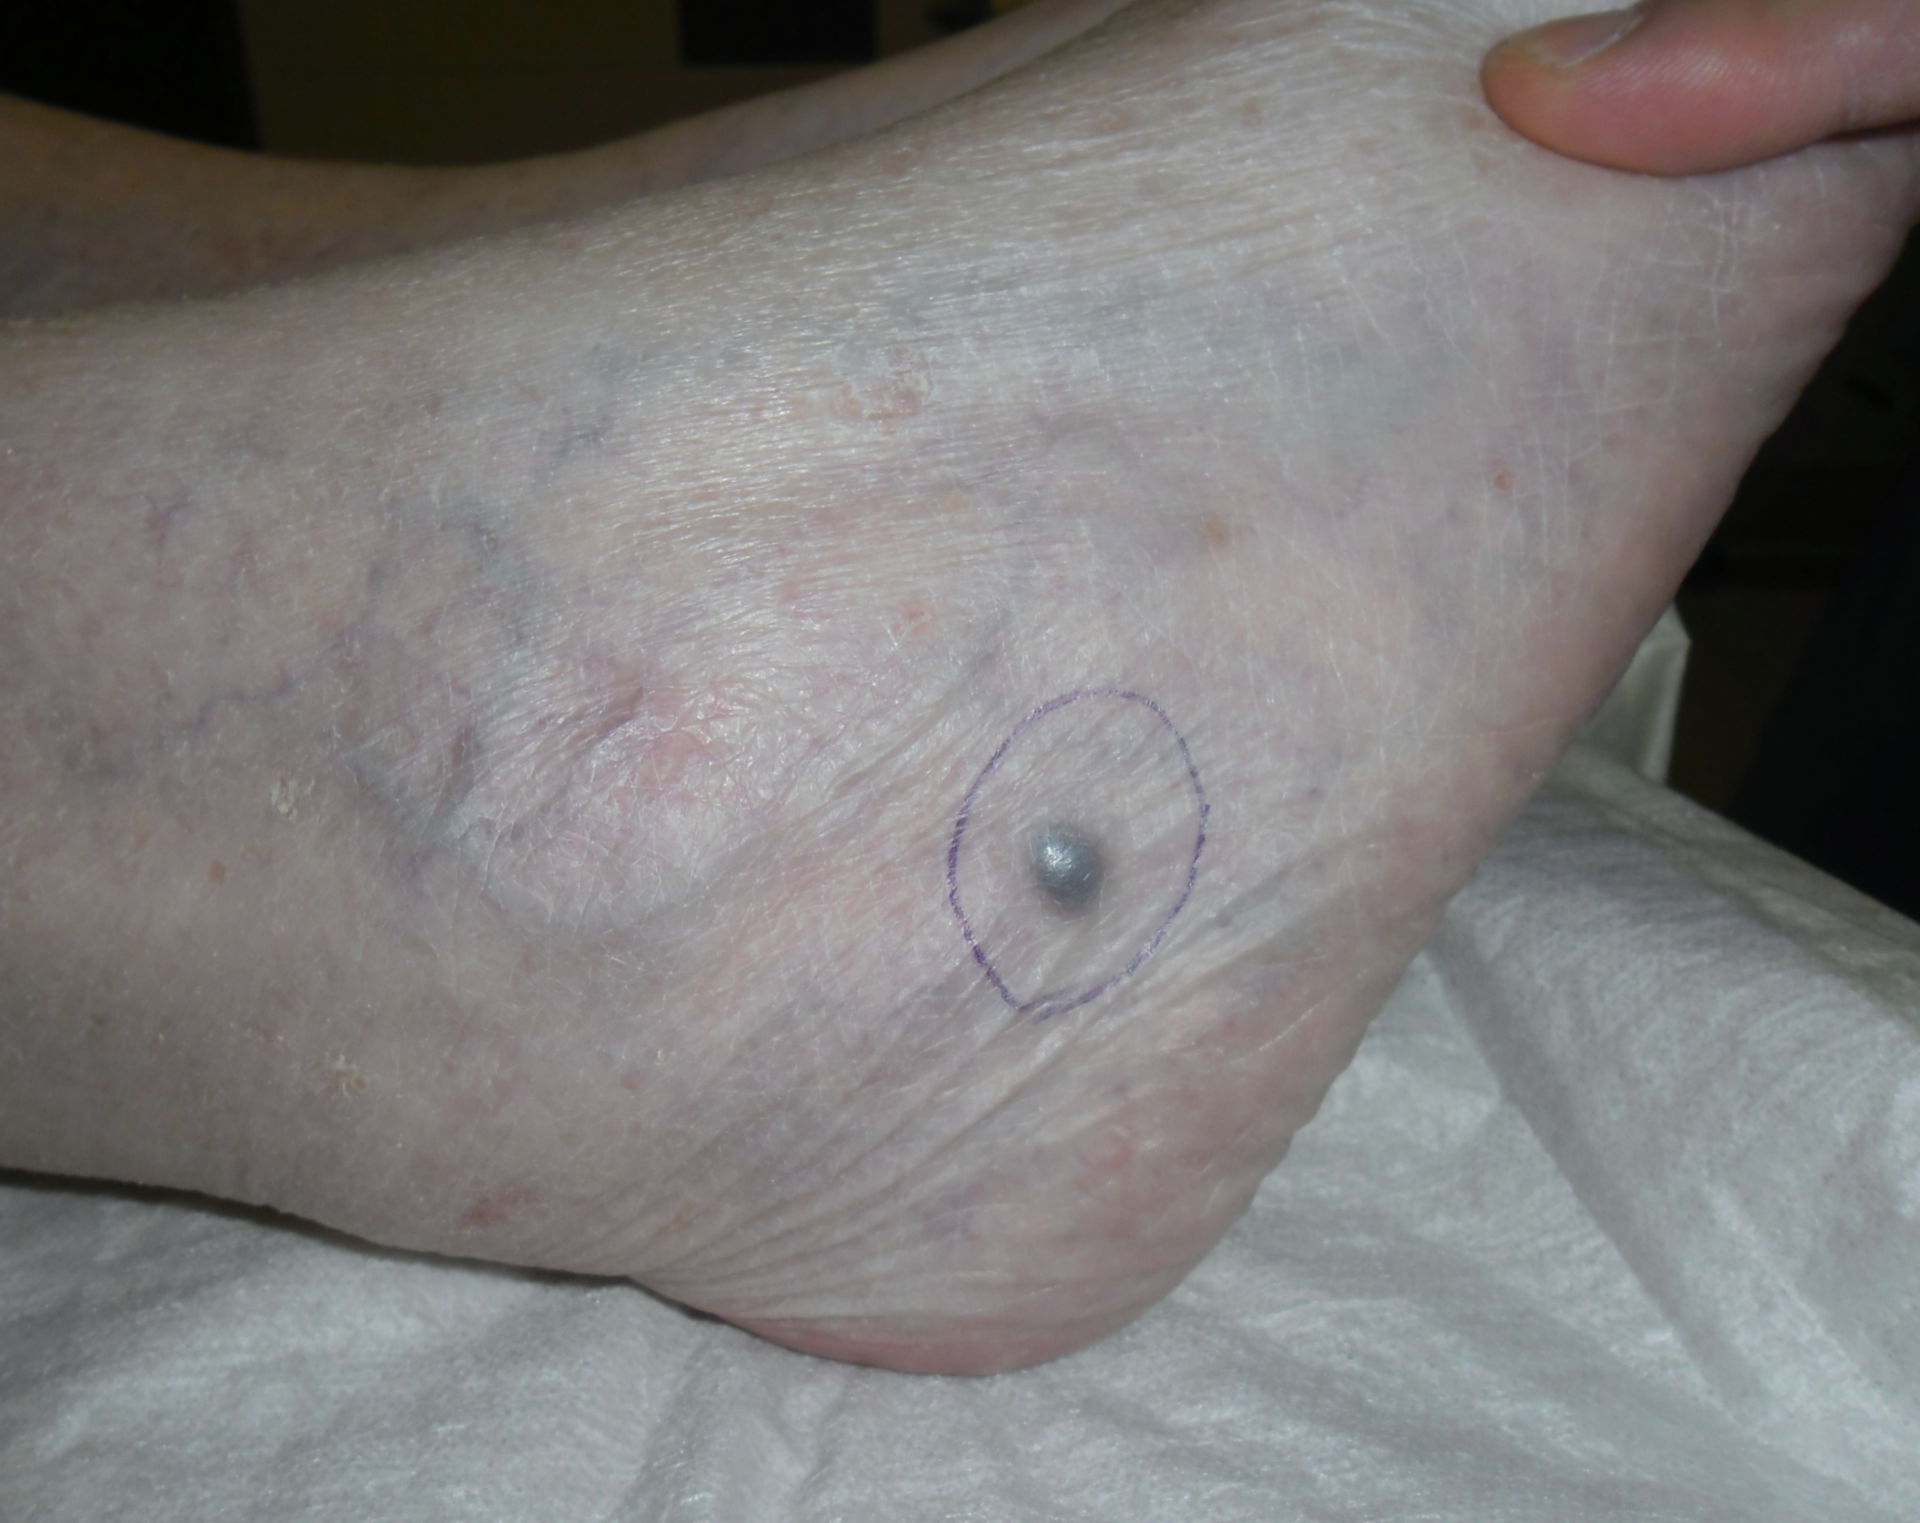 Melanoma - Metastasis on the foot